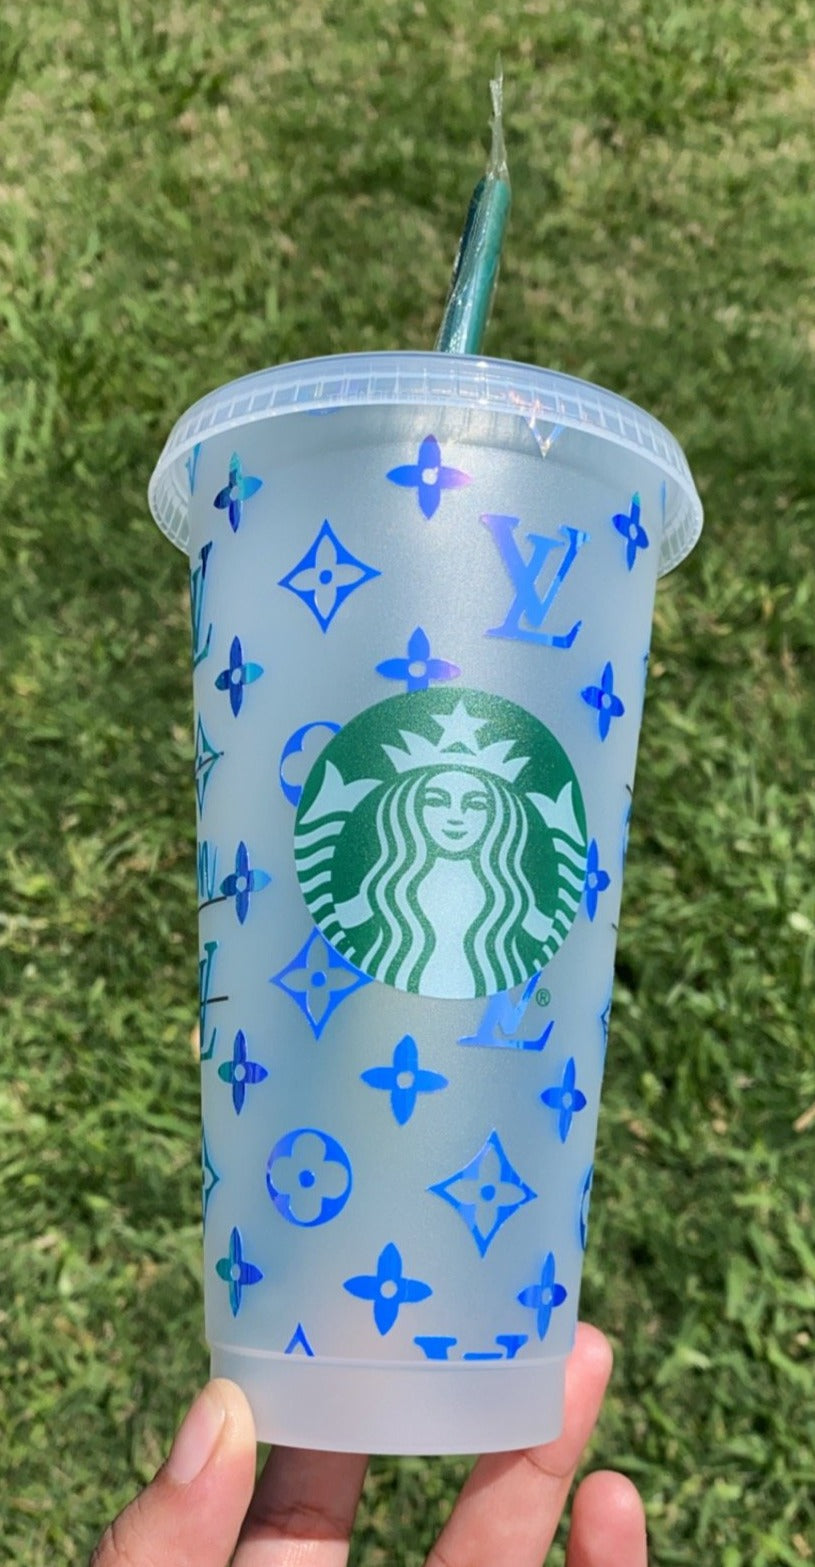 Louis Vuitton Starbucks Cup 